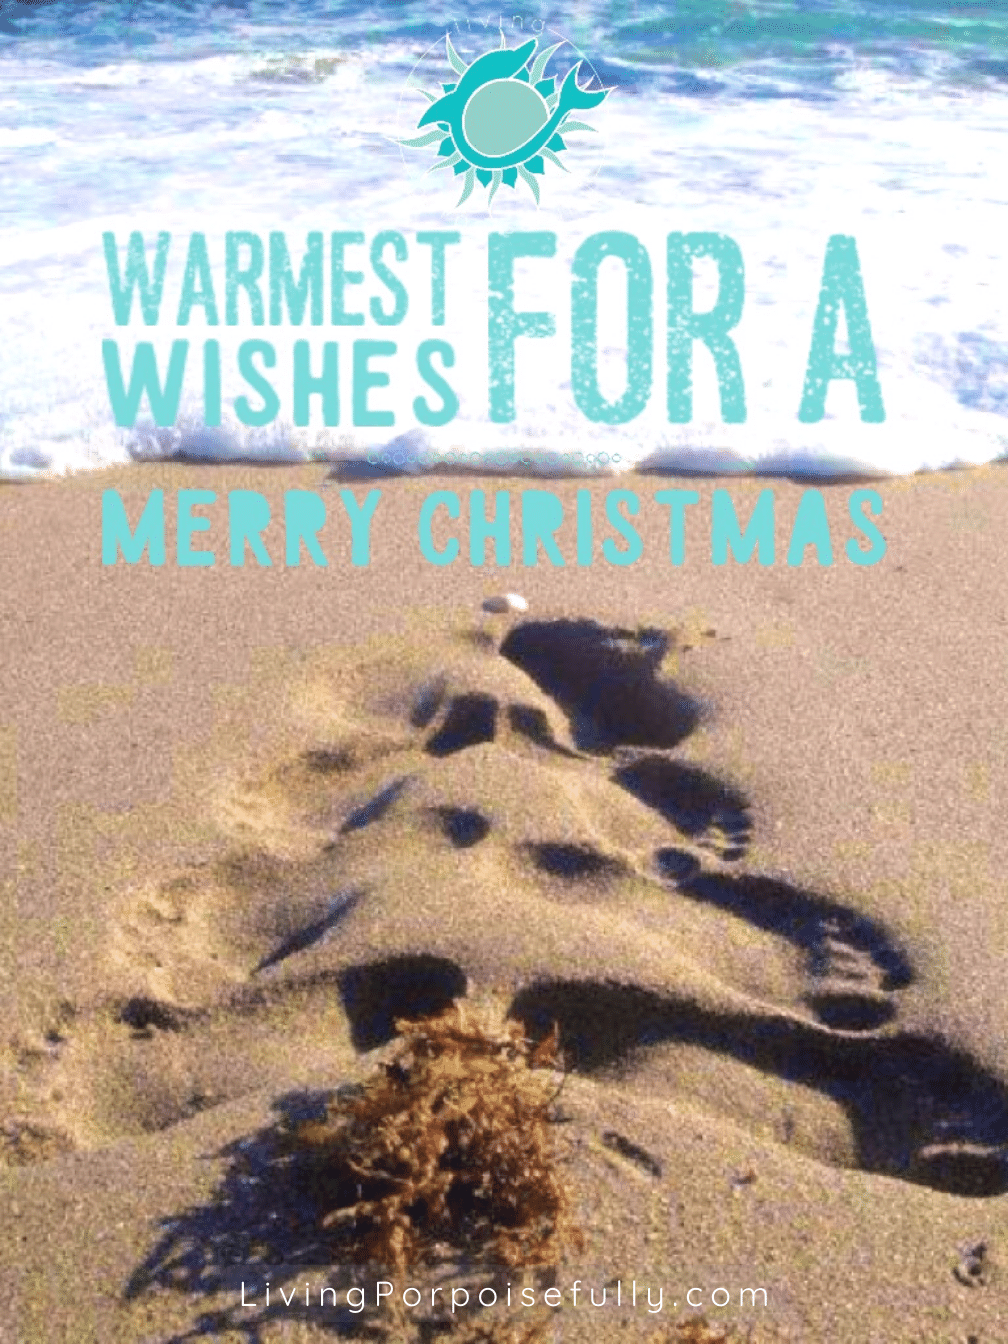 Warmest Wishes for a Merry Christmas - footprint sand Christmas tree beach florida - Living Porpoisefully